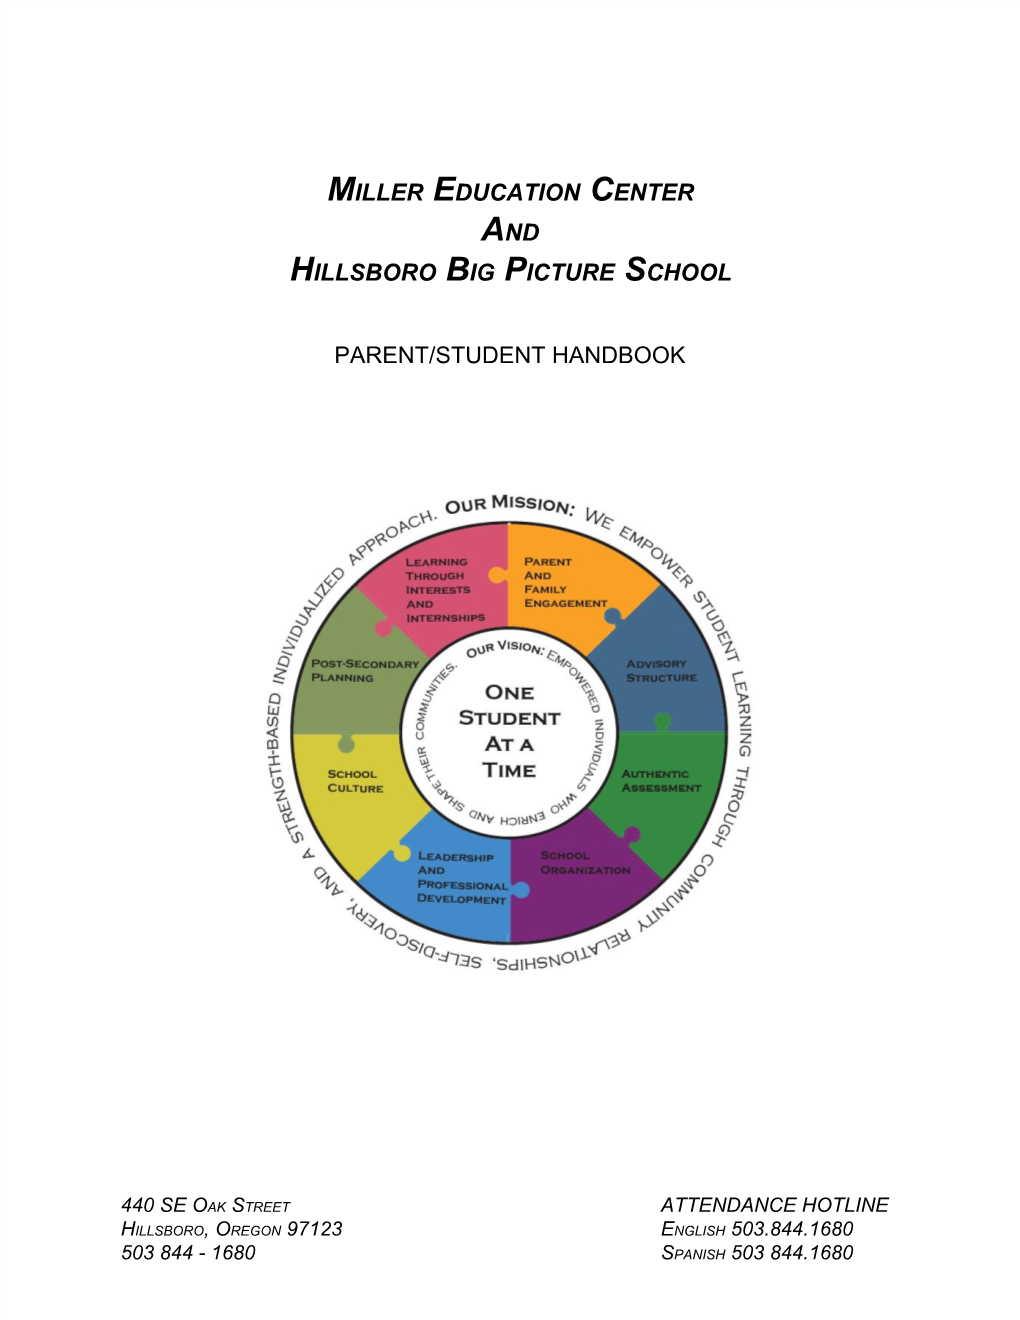 Miller Education Center and Hillsboro Big Picture School